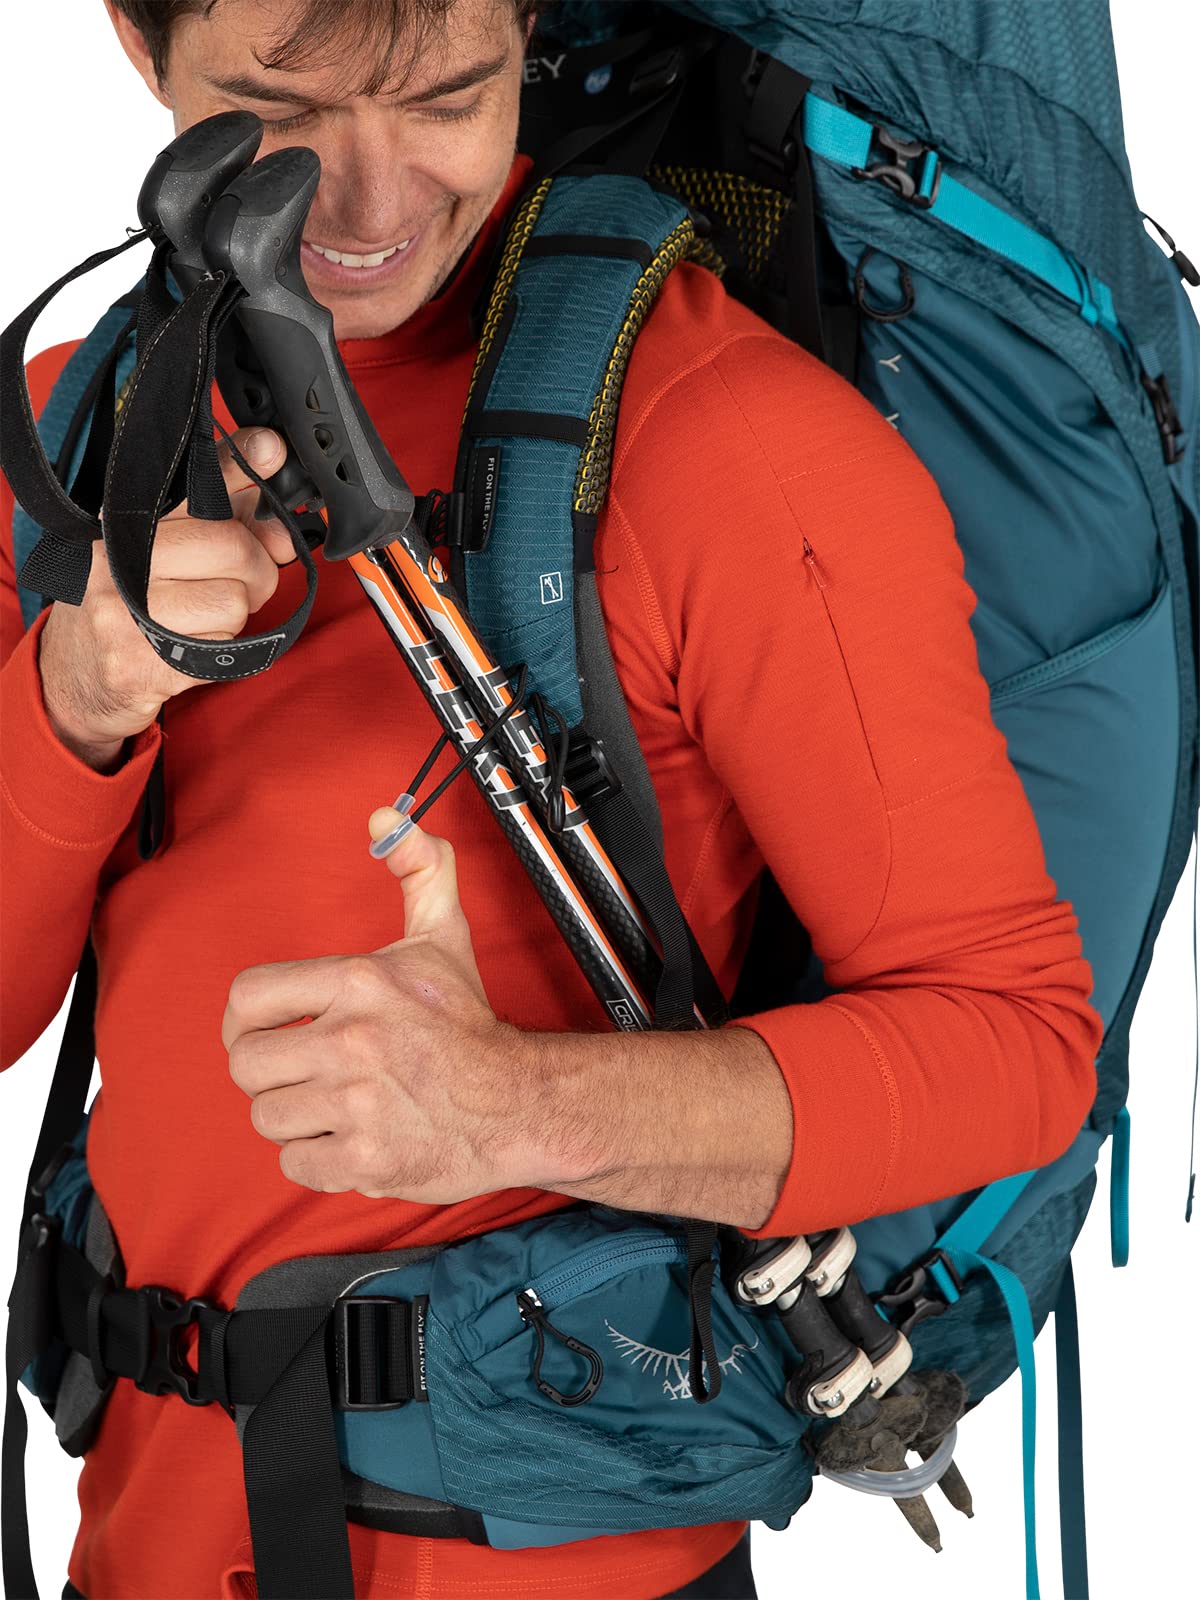 Osprey Atmos AG 65 Men's Backpacking Backpack, Venturi Blue, Large/X-Large